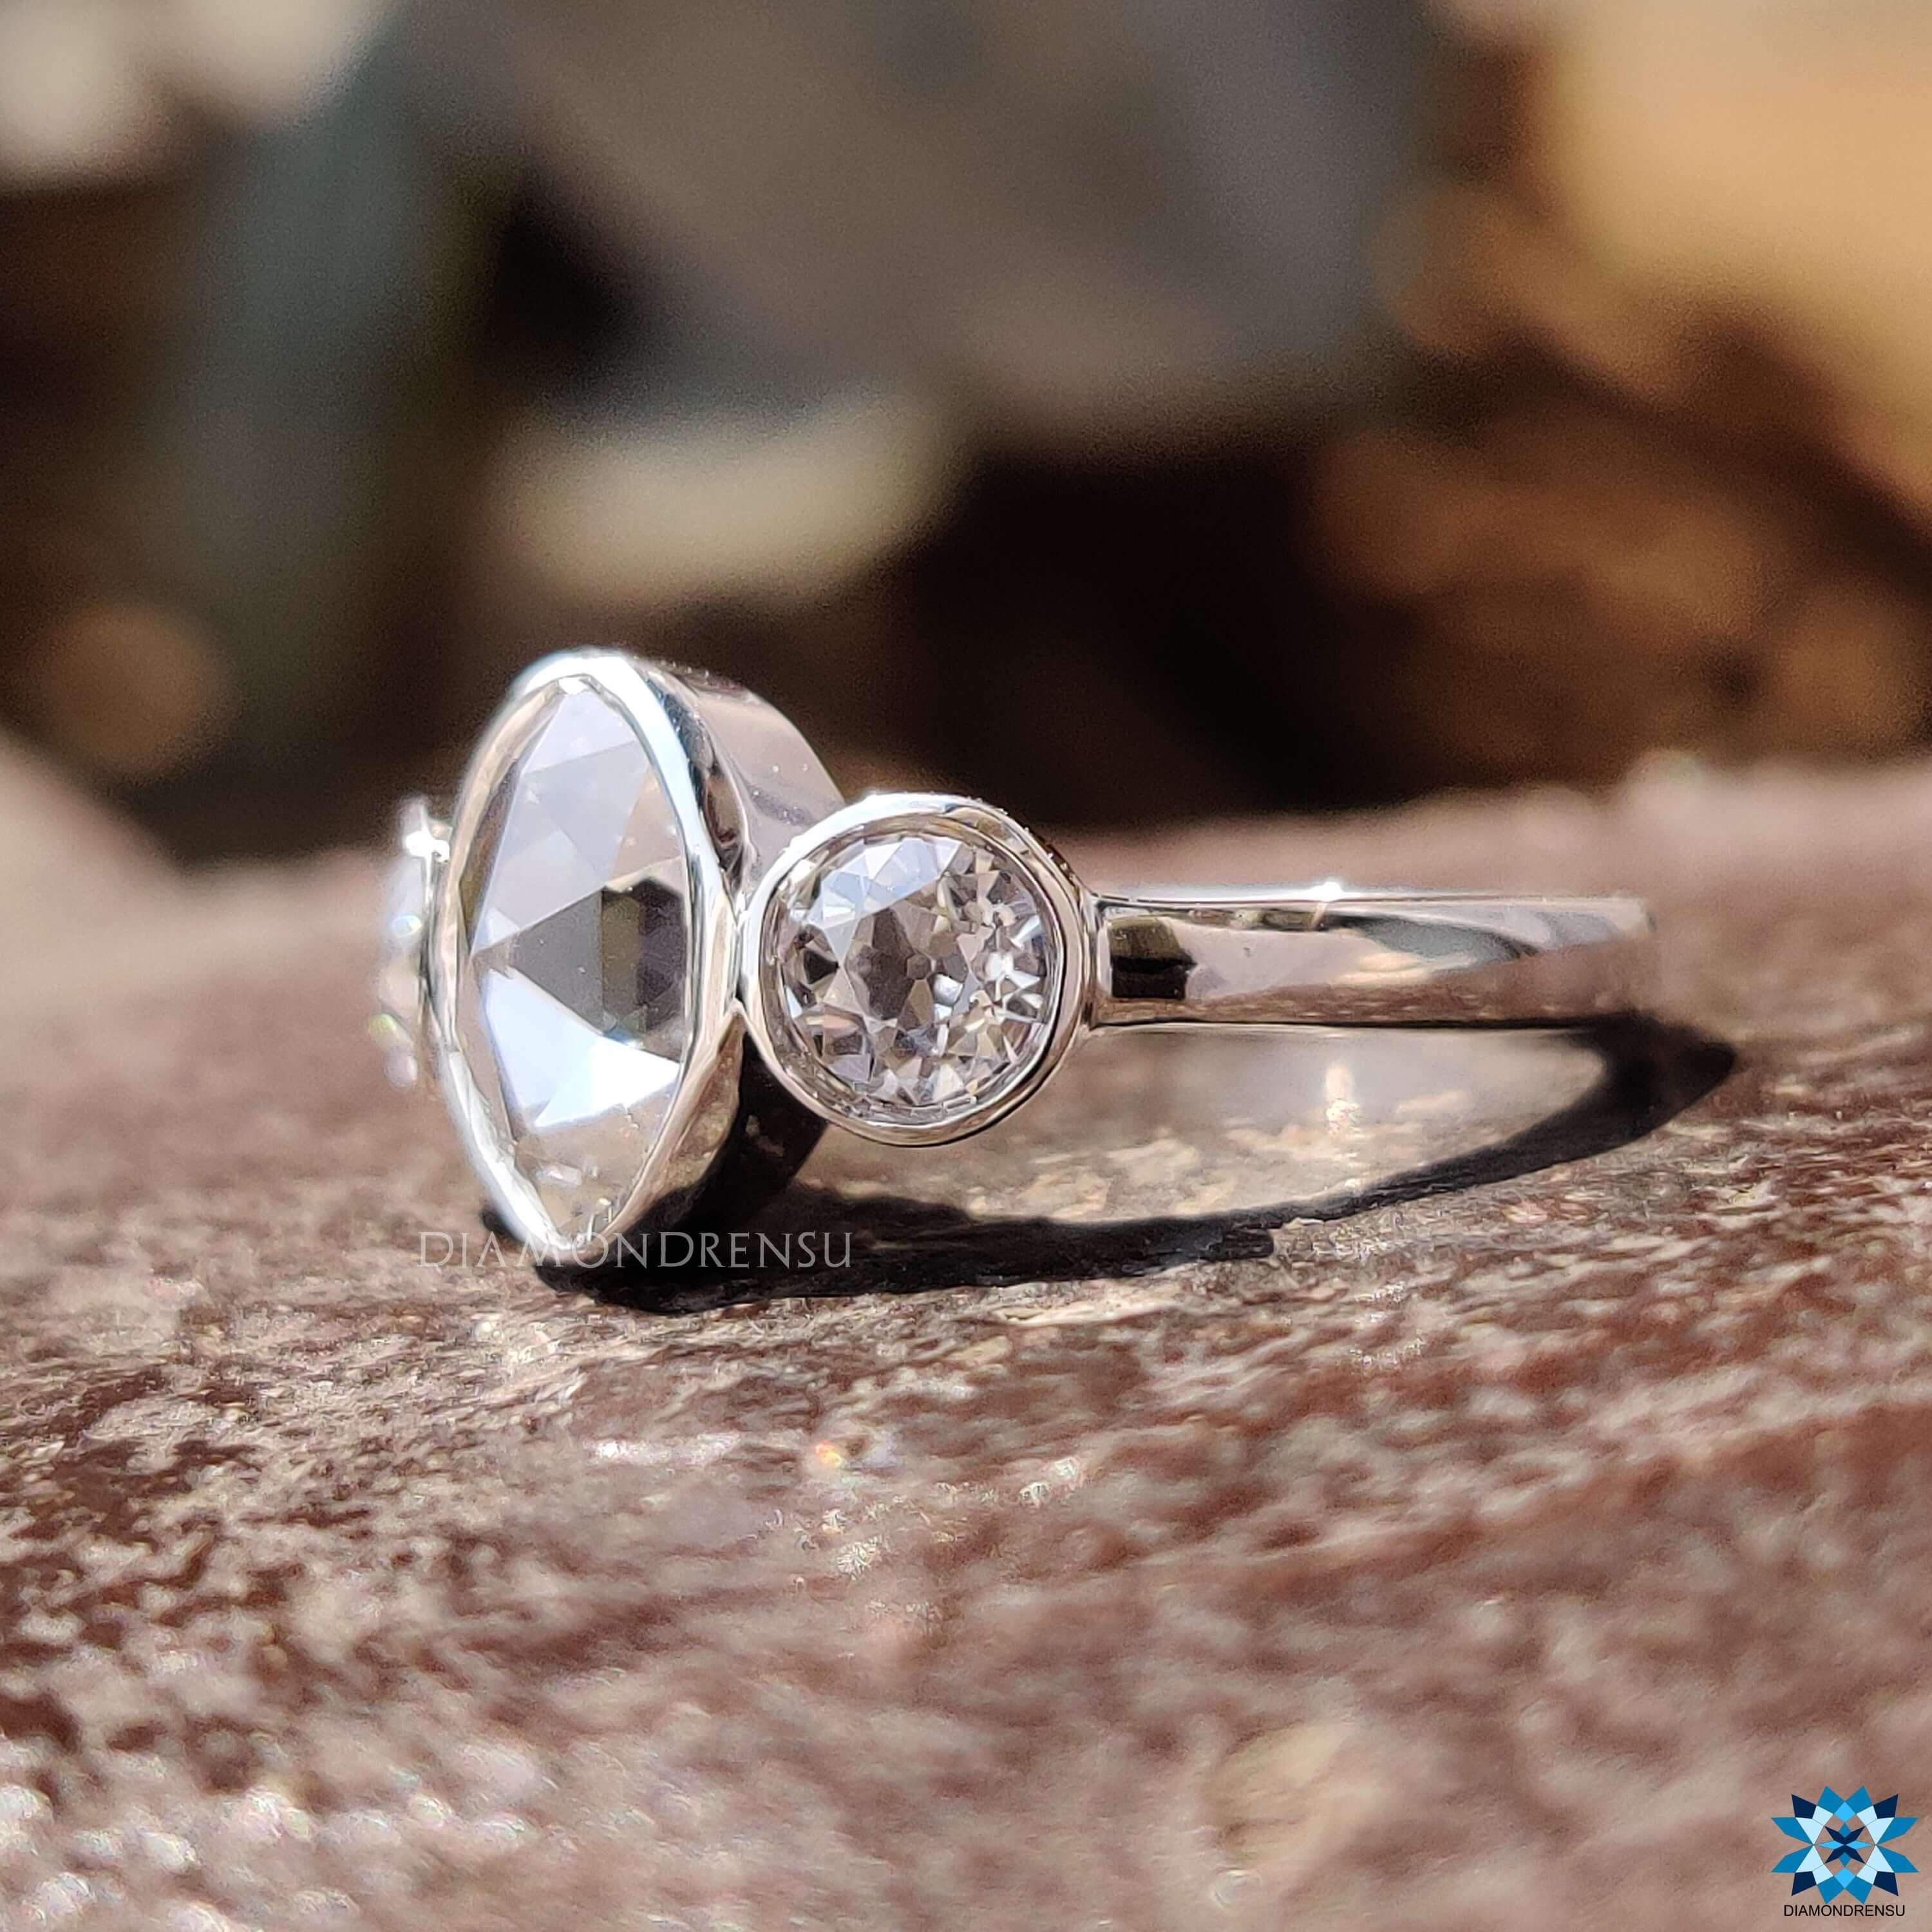 customized engagement ring - dimaondrensu